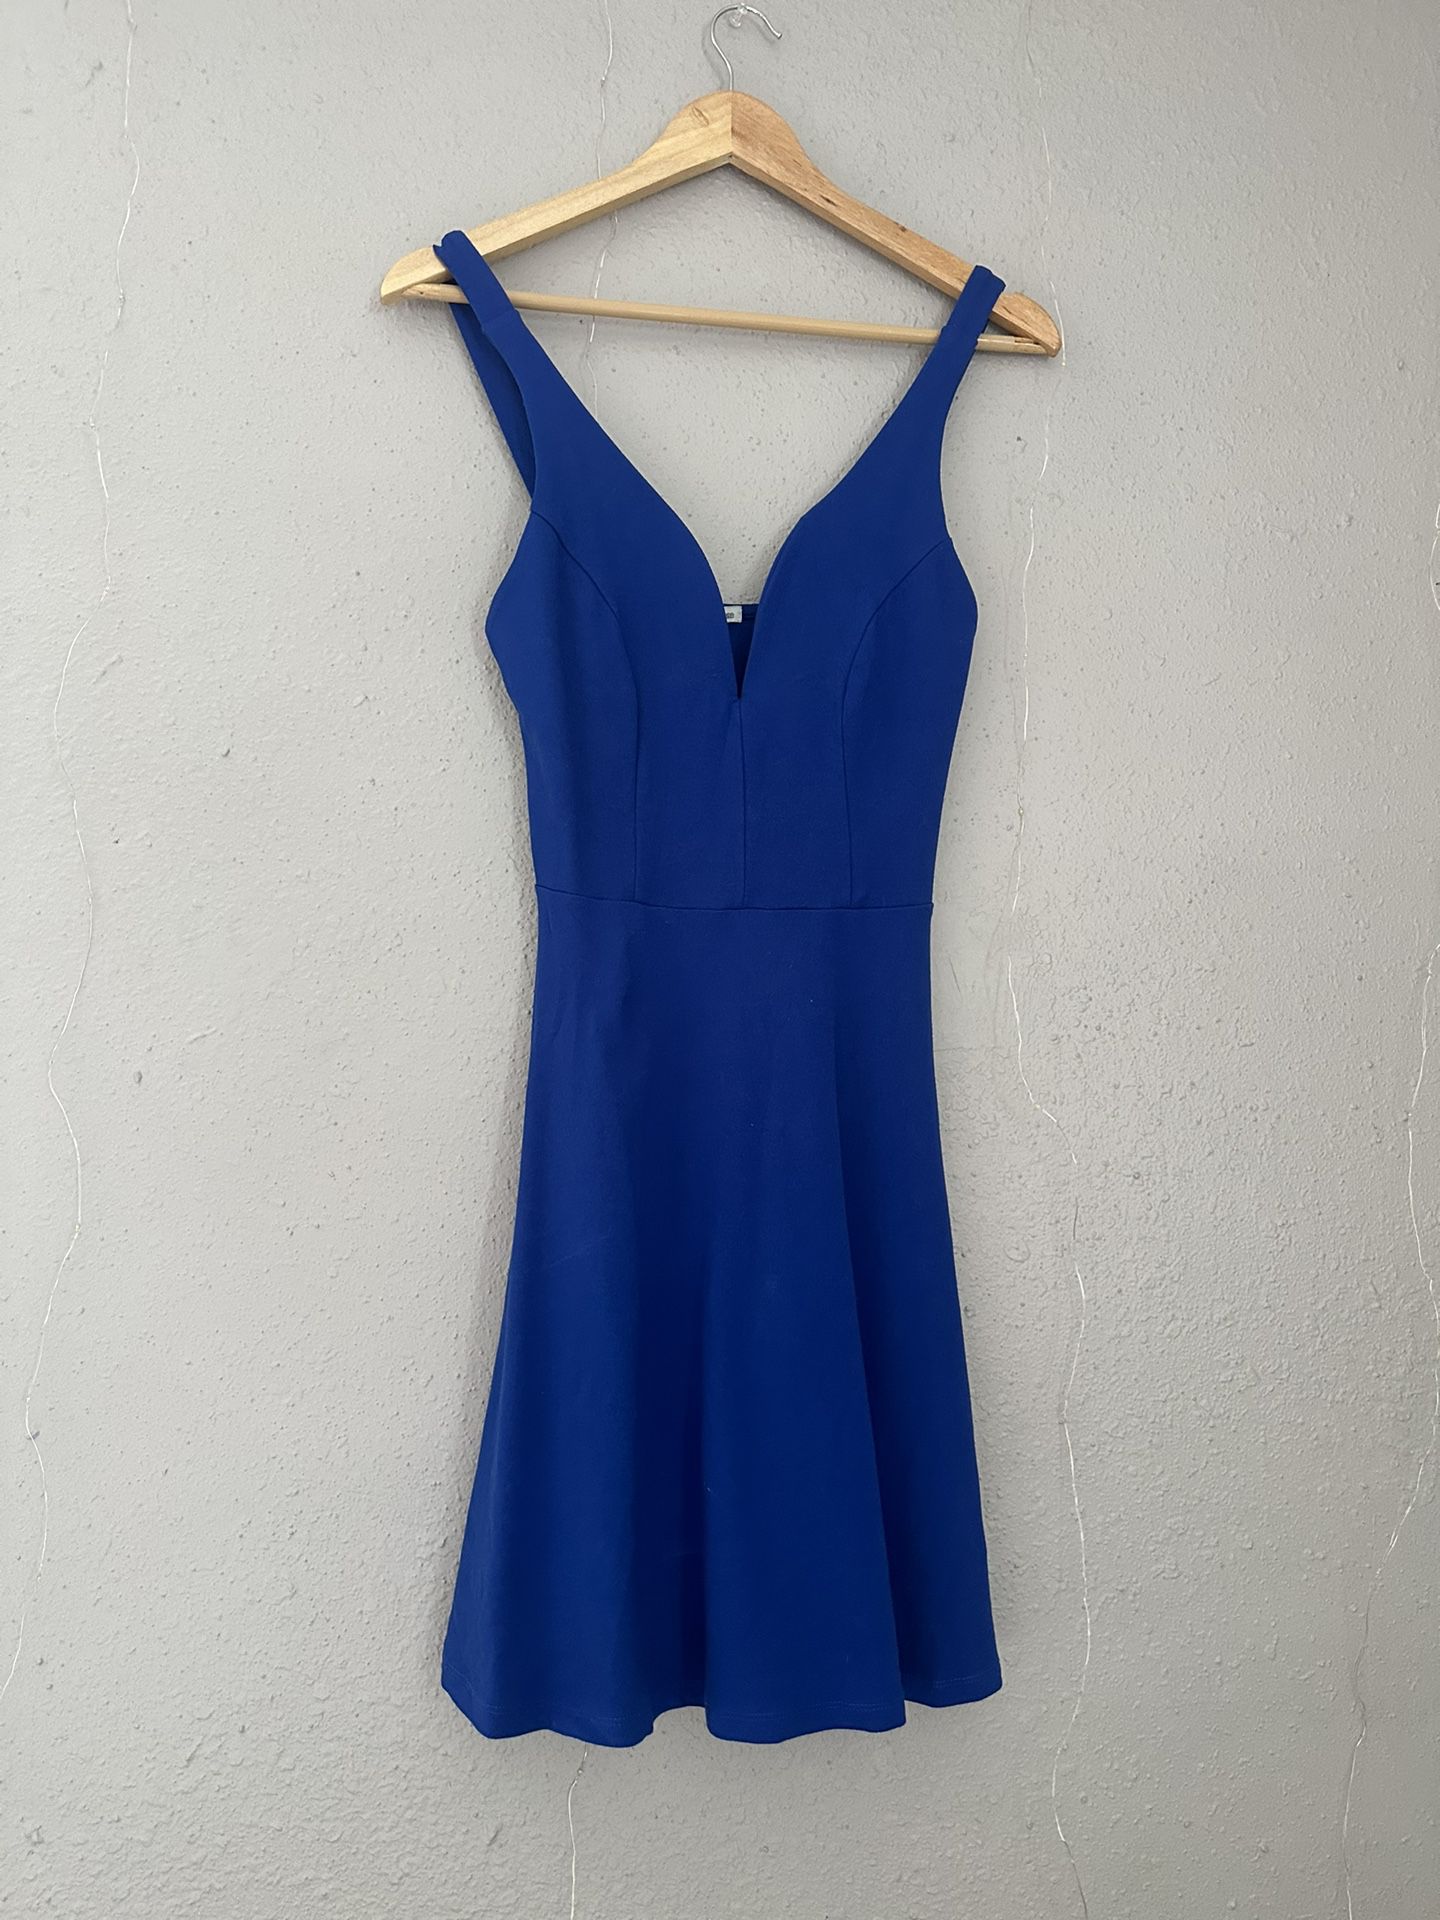 Small, Royal Blue, Plunging V-neck Dress